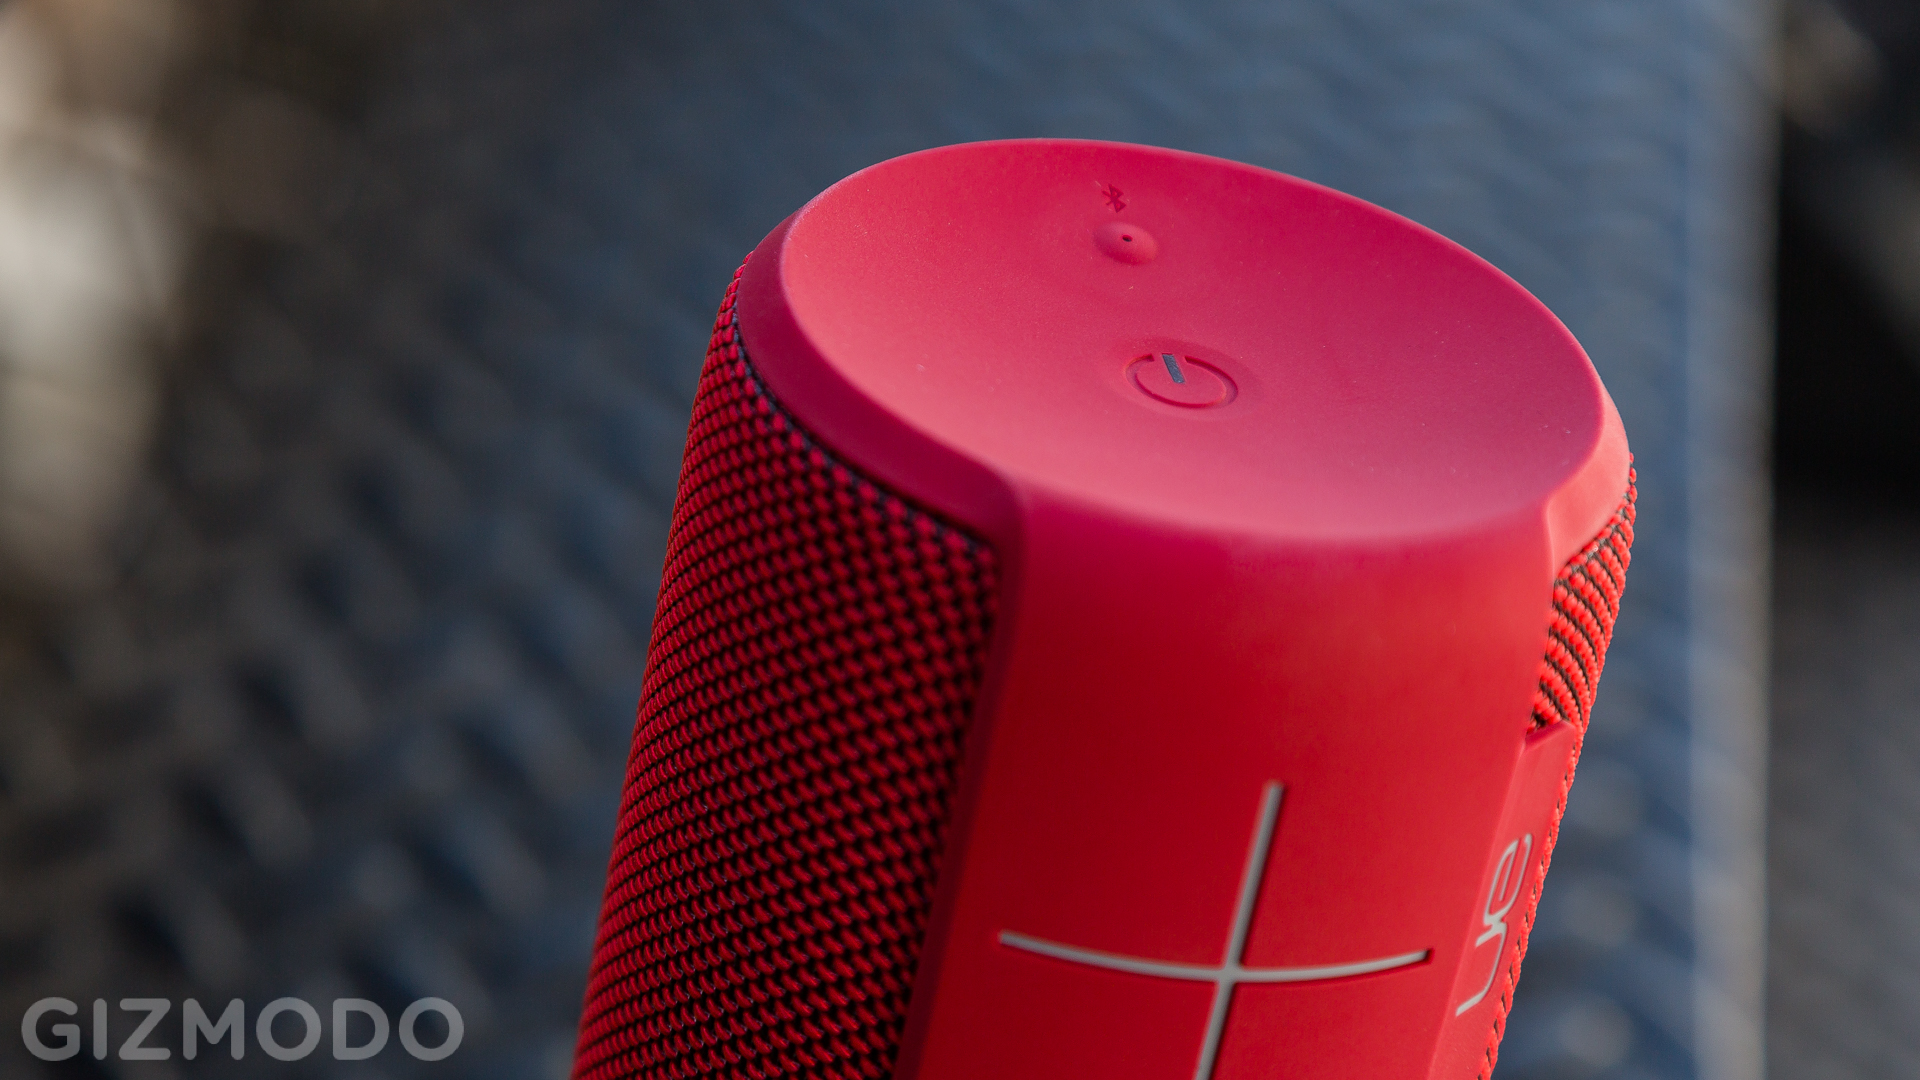 UE Megaboom: The Best Bluetooth Speaker, Supersized 